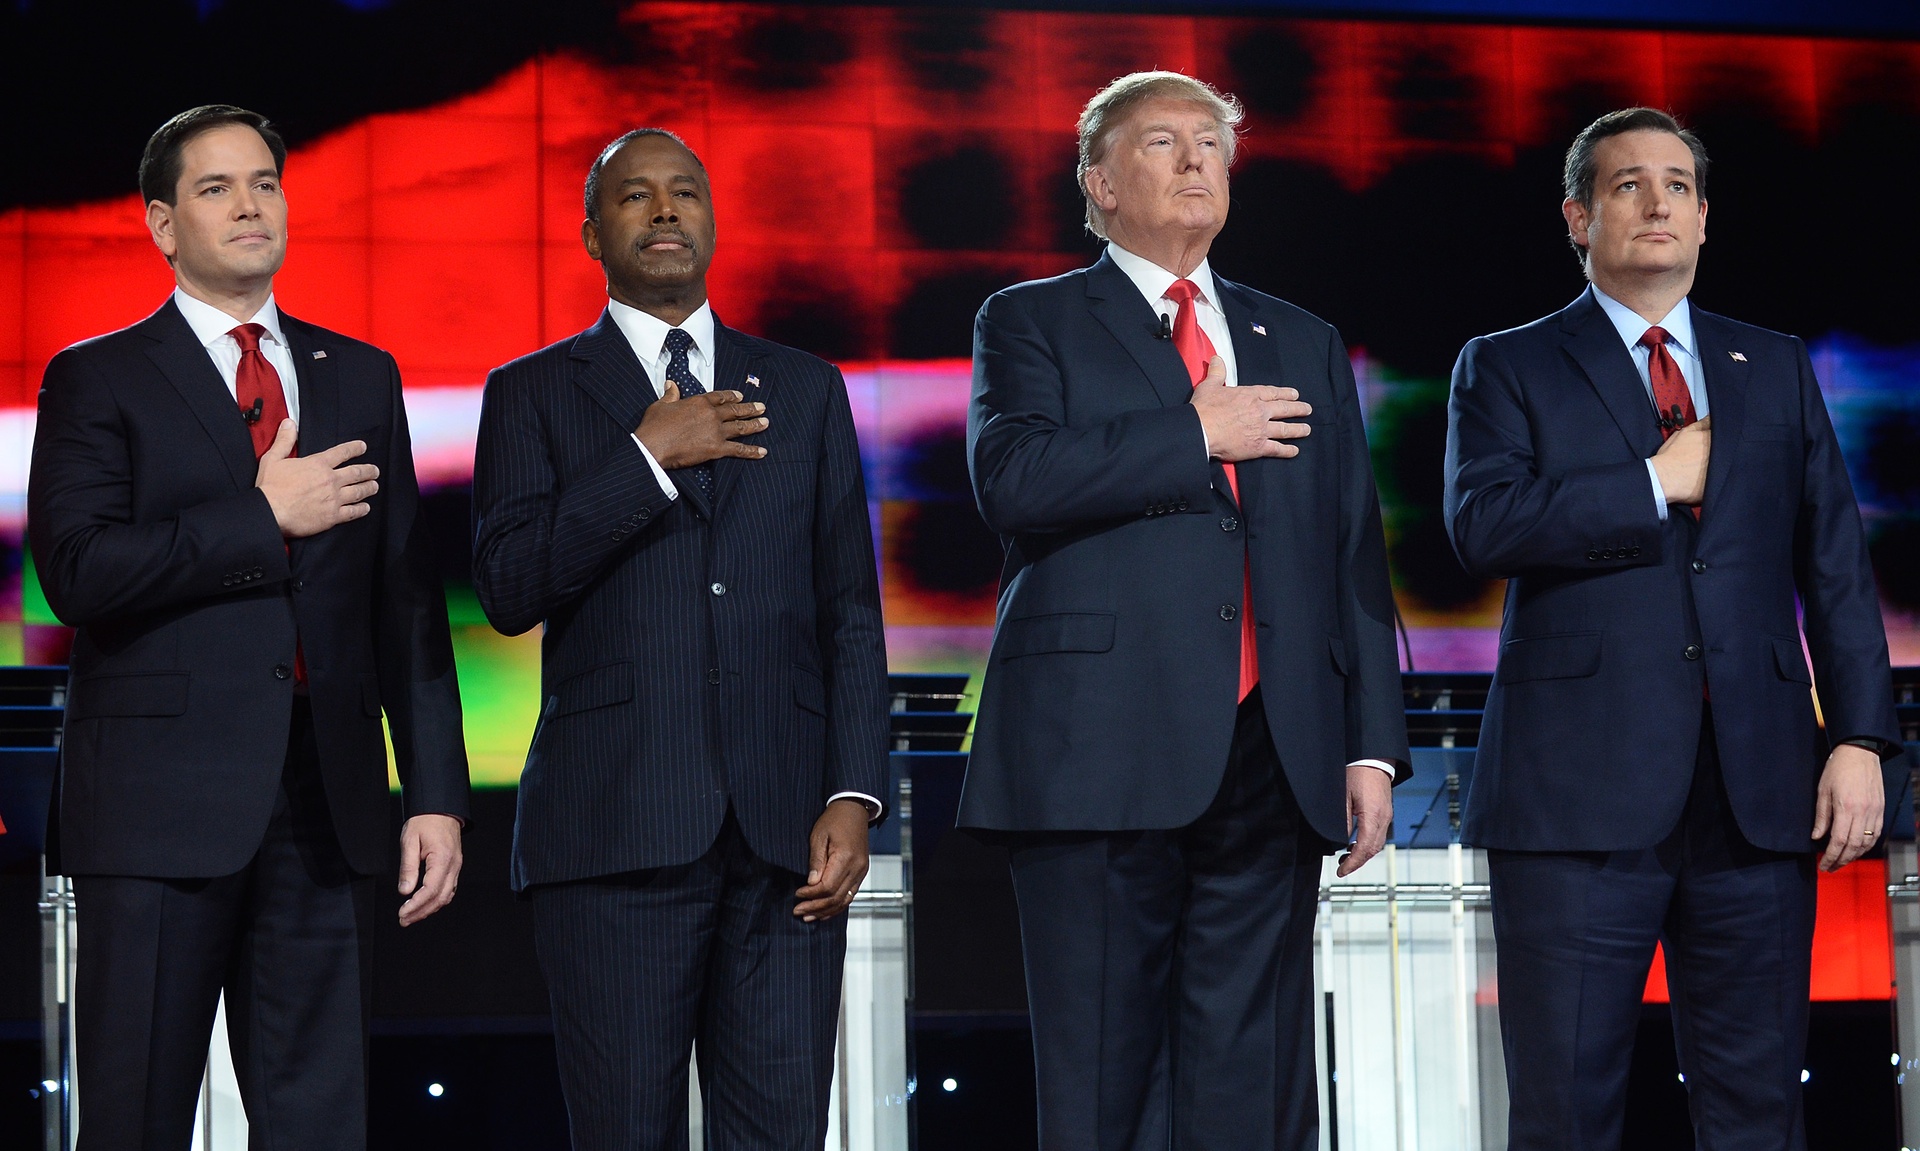 Marco Rubio, Ben Carson, Donald Trump and Ted Cruz offered aggressive rhetoric against Isis at Tuesday’s debate. Photograph: UPI /Landov / Barcroft Media